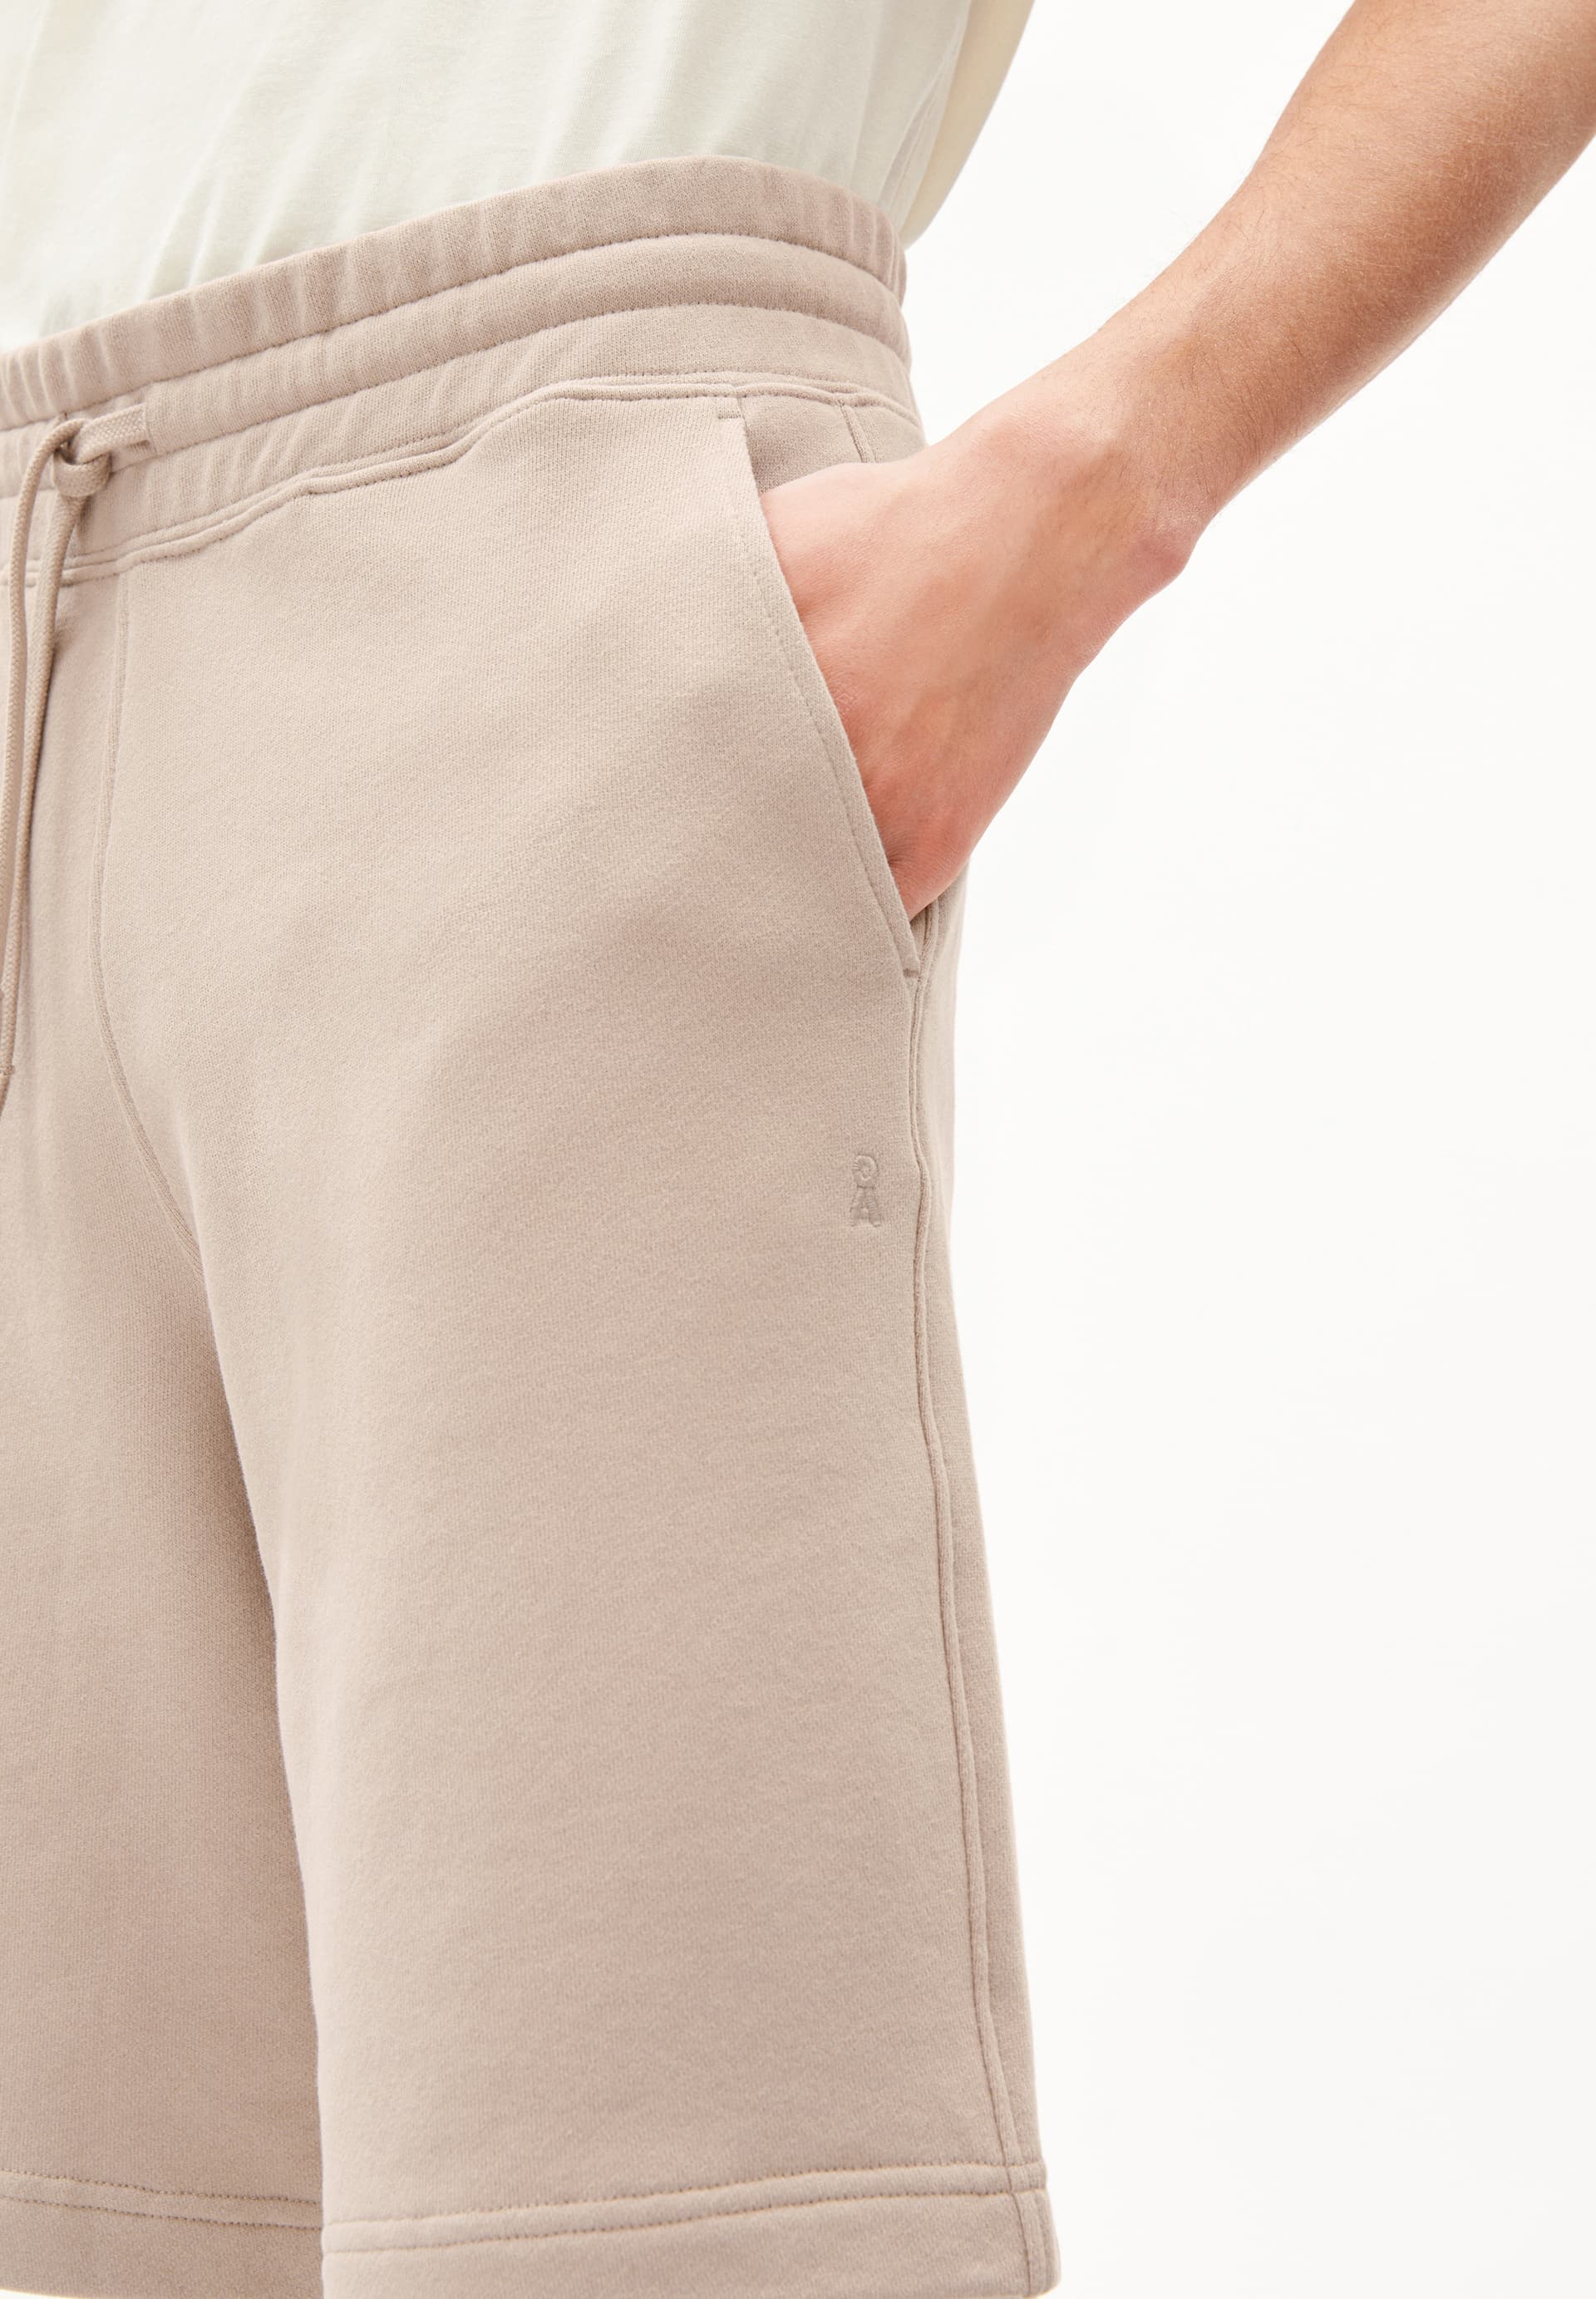 MAARCO COMFORT Sweat Shorts made of Organic Cotton Mix